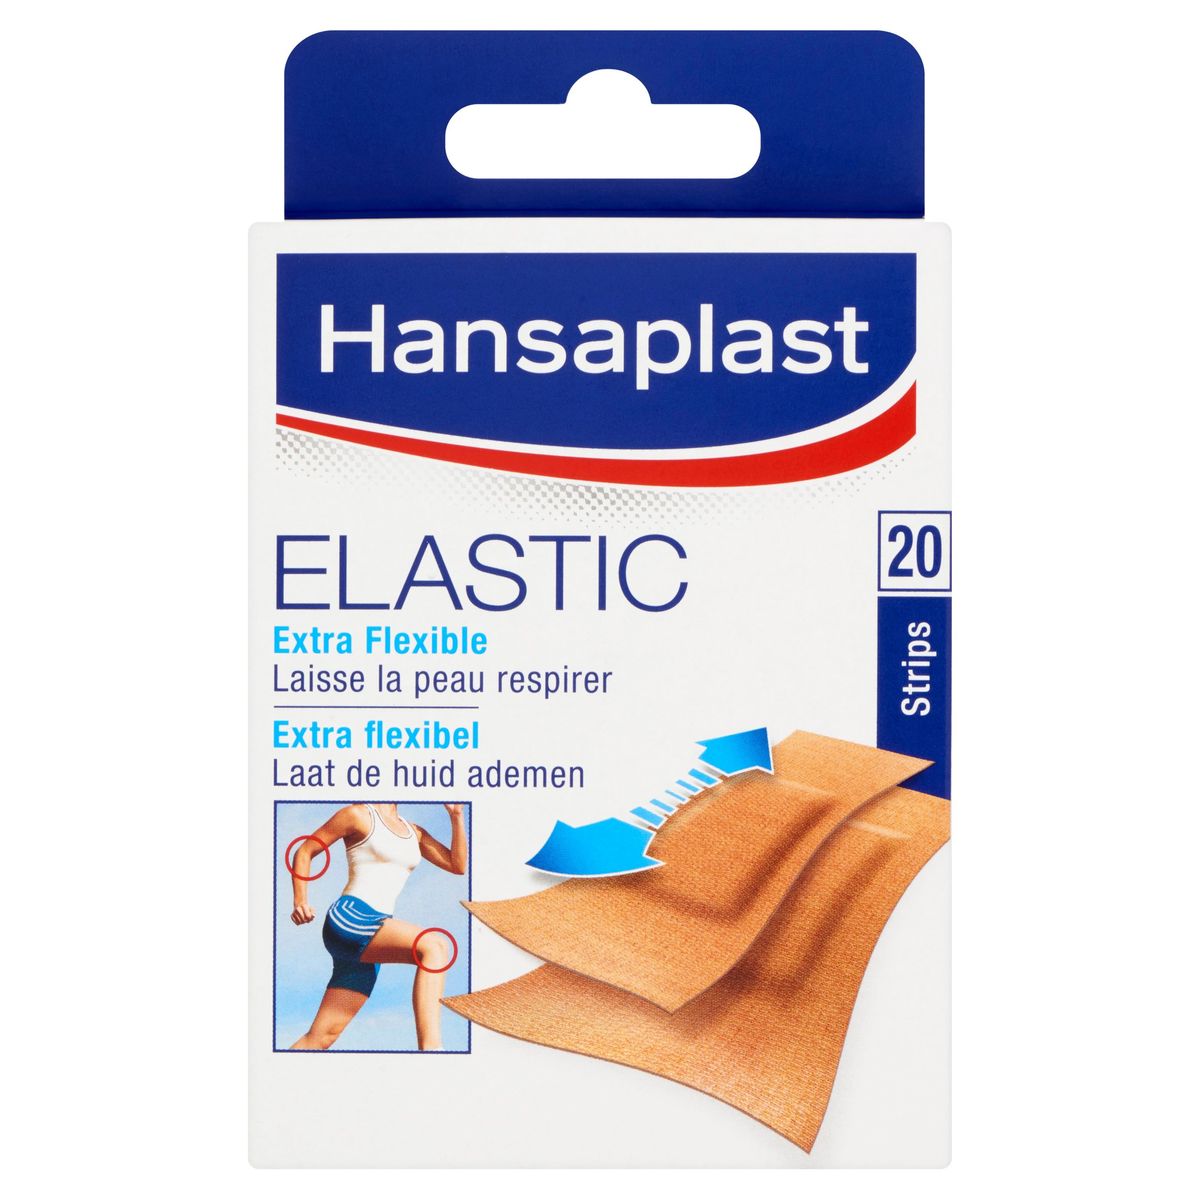 Hansaplast Elastic 20 Strips